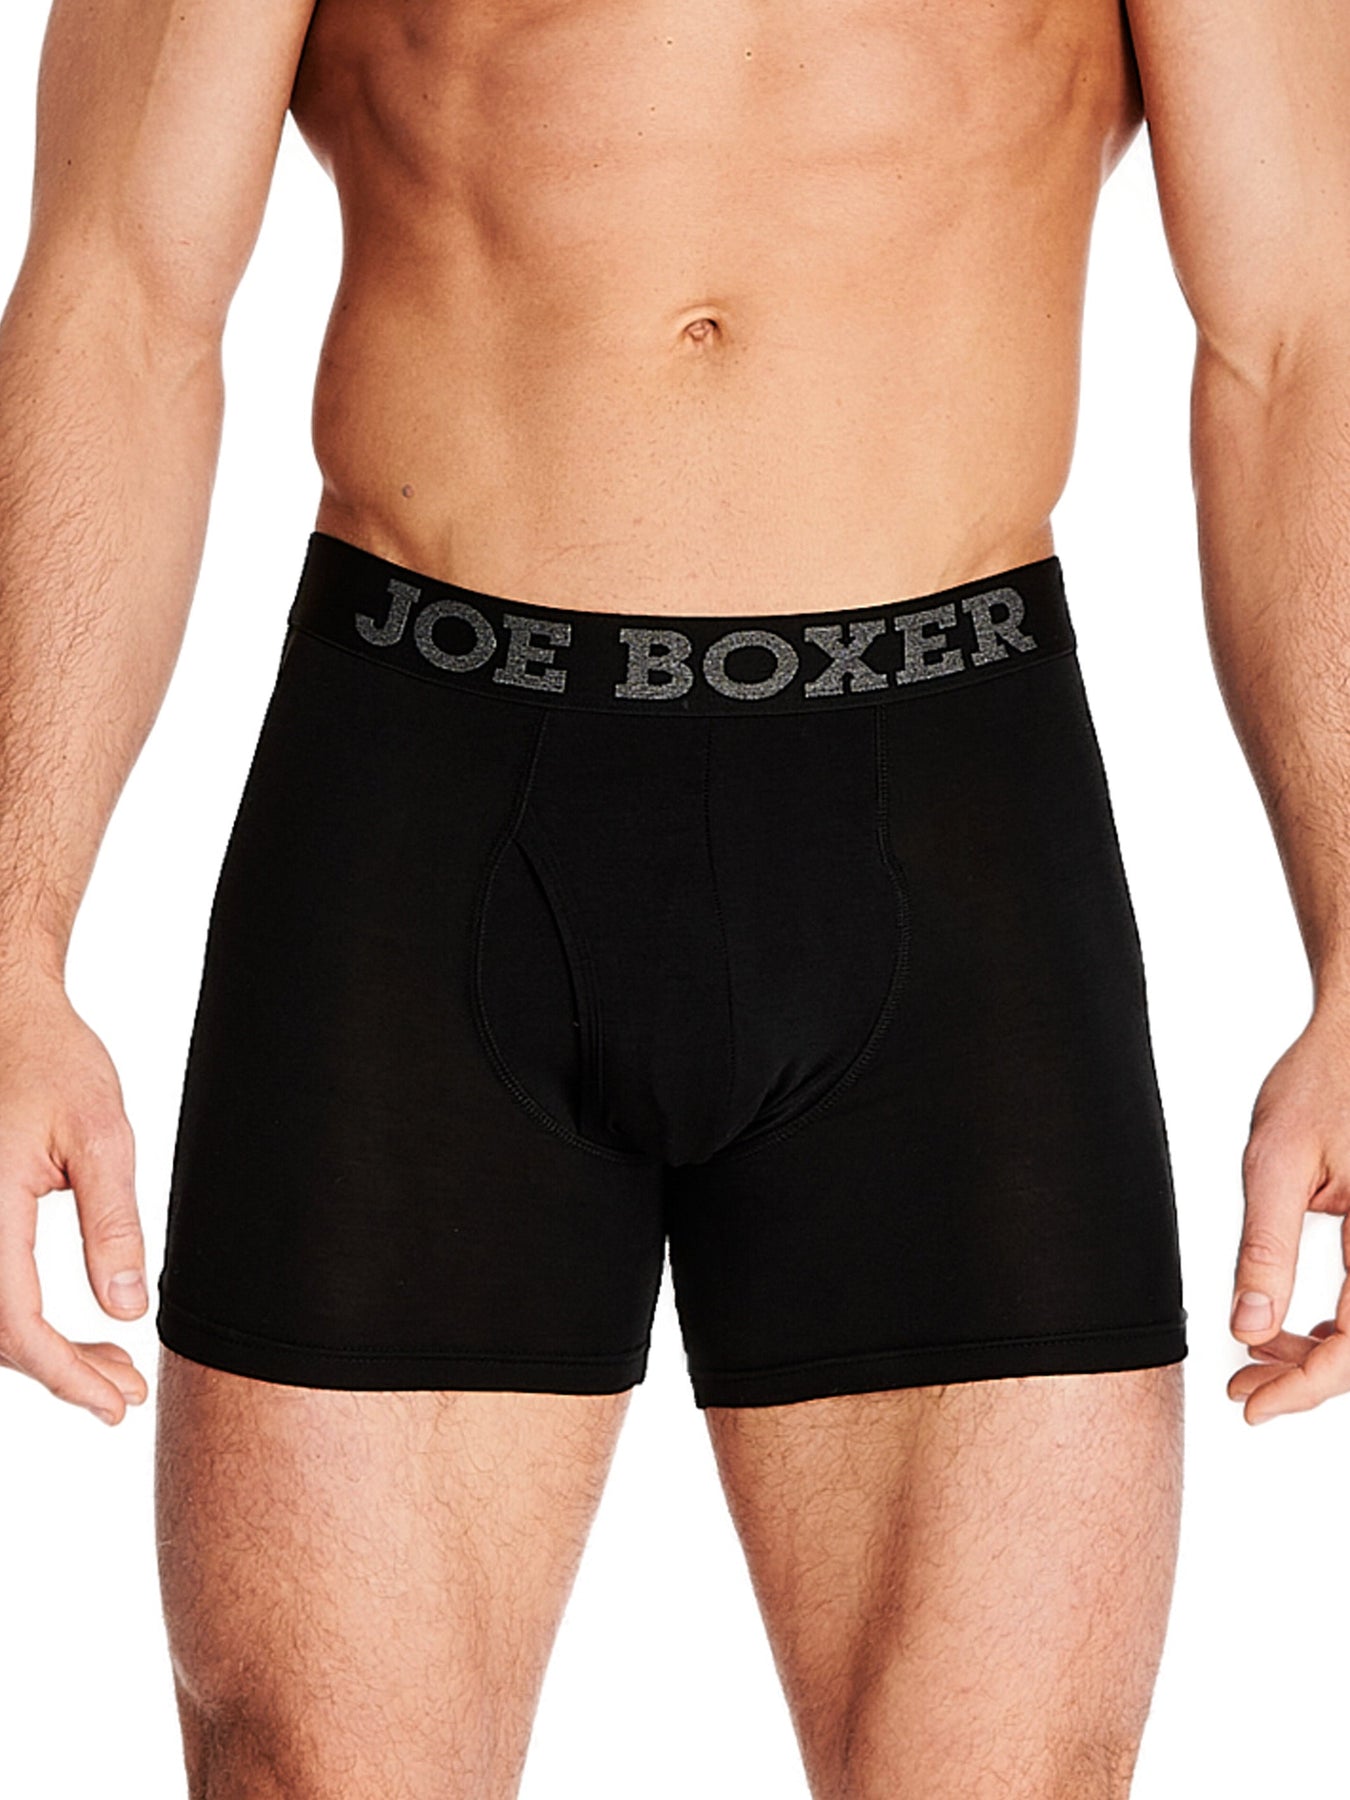 Balance Tech Performance Boxer Brief Soccer Keeper Theme Underwear Large NWT